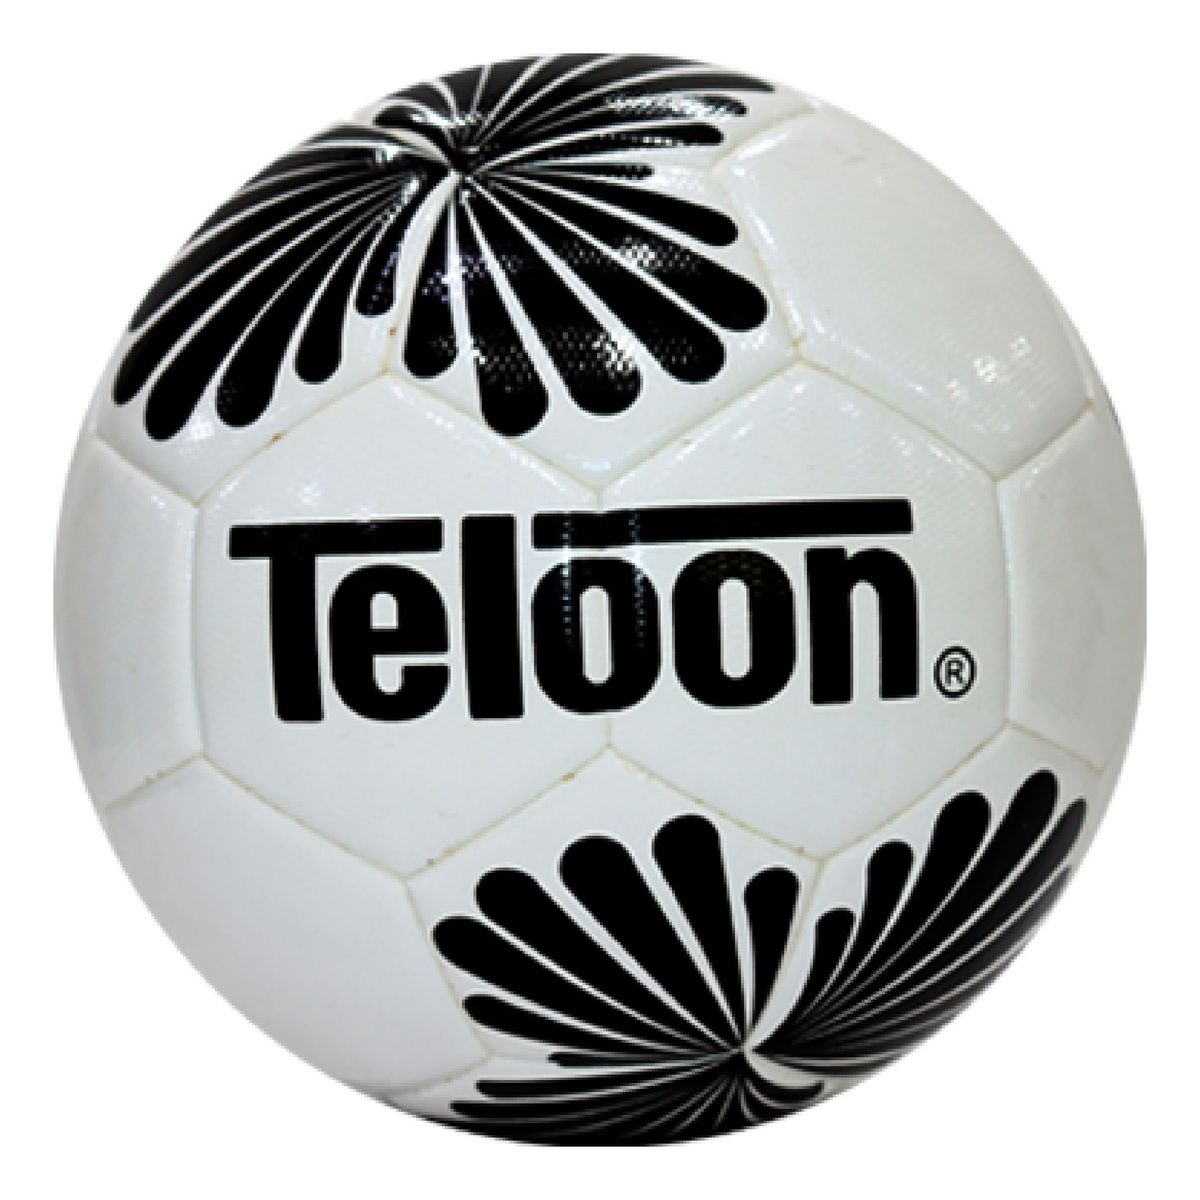 Teloon Football No.5 FF8850/8840 Assorted